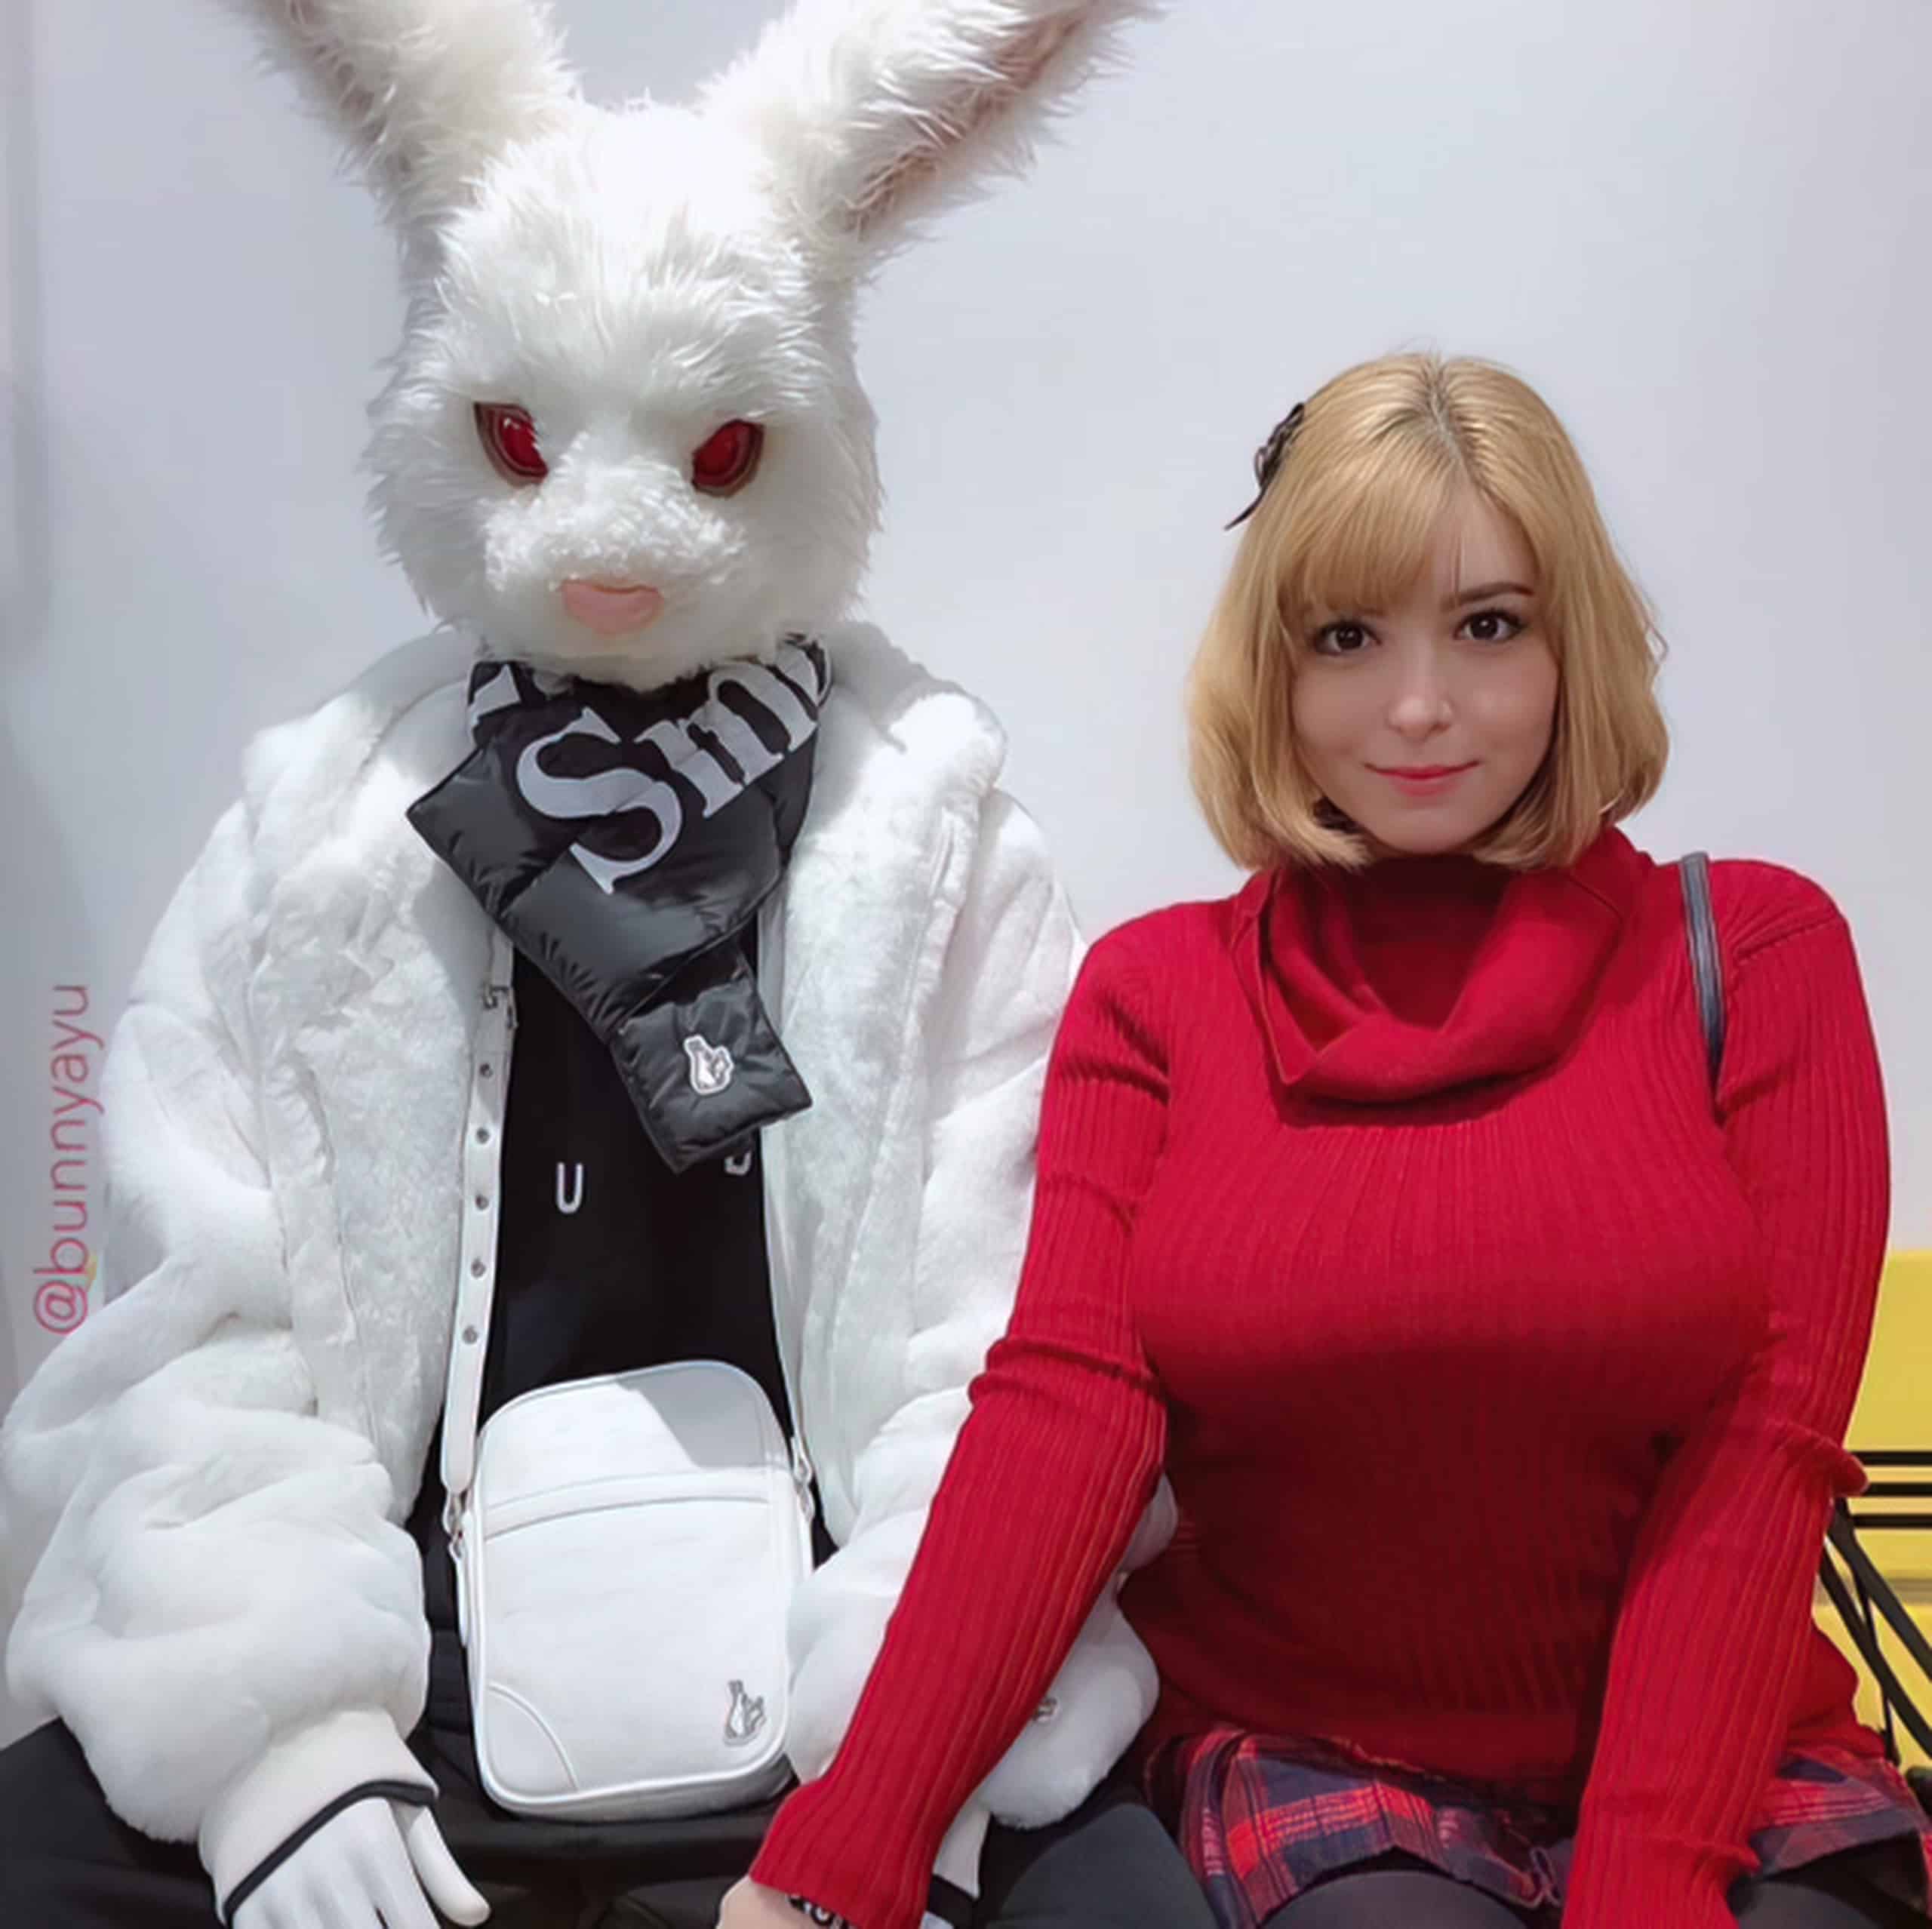 Bunny Ayumi with a rabbit